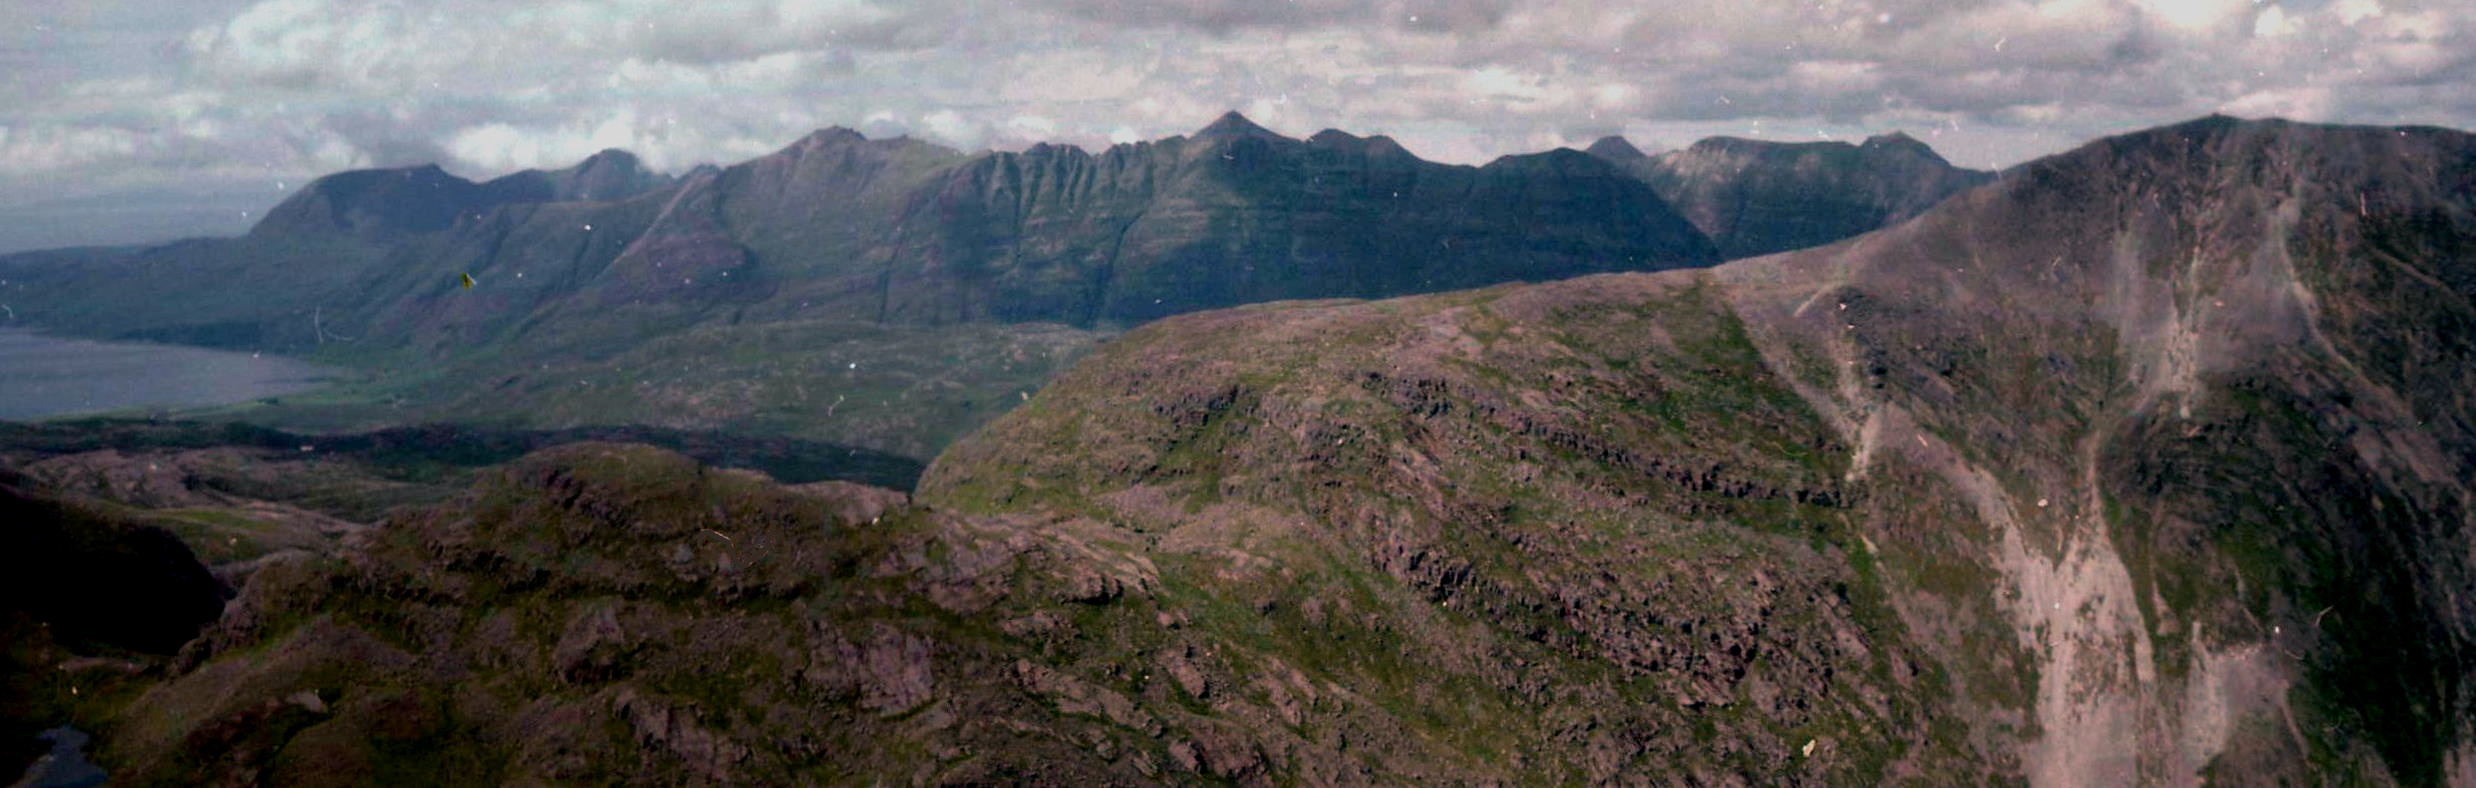 Loch Torridon and Torridon Peaks from Sgorr Ruadh in NW Scotland